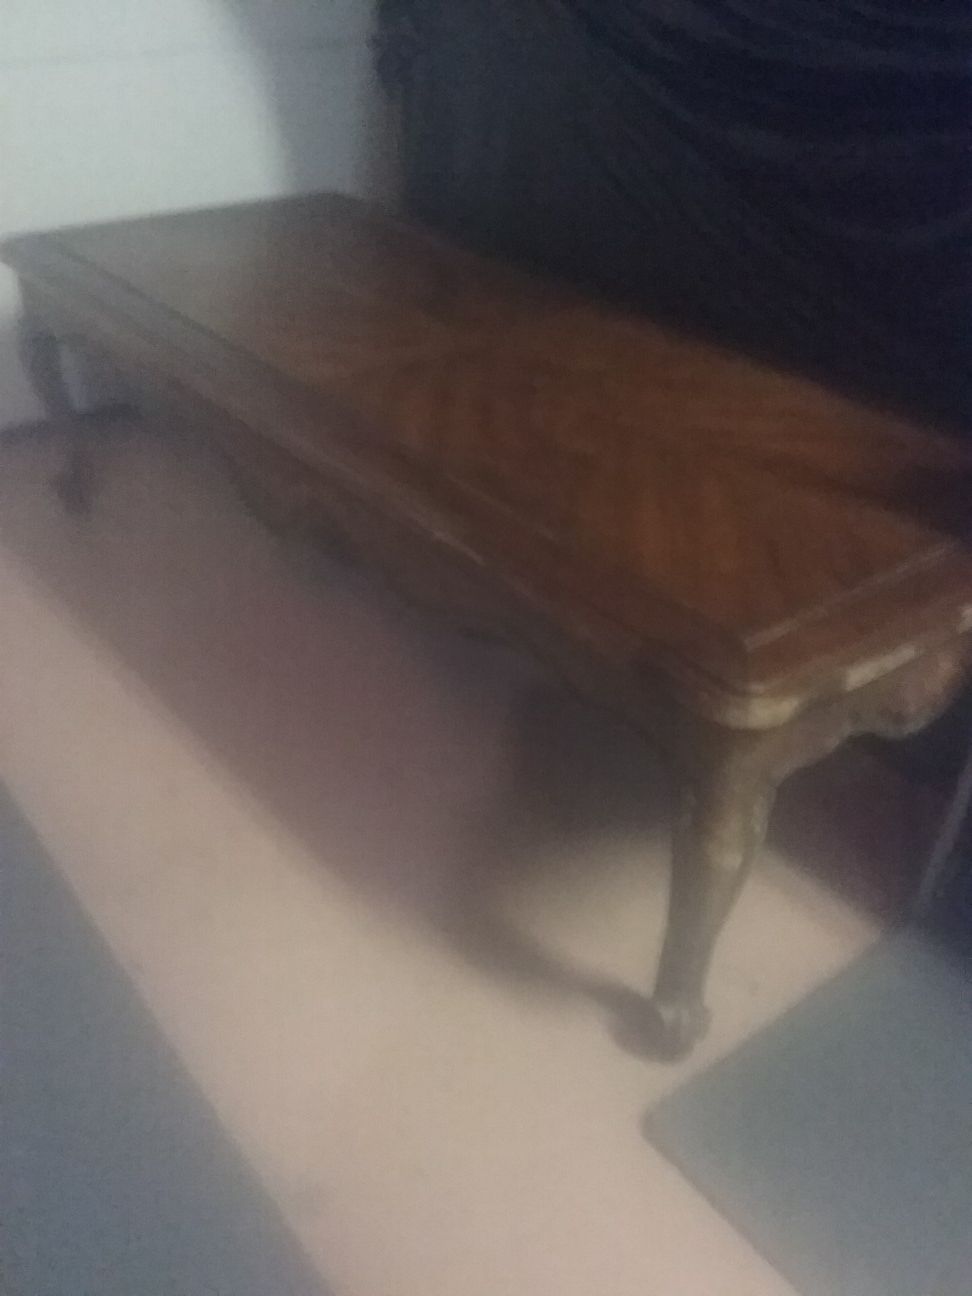 Wood coffee table. $25